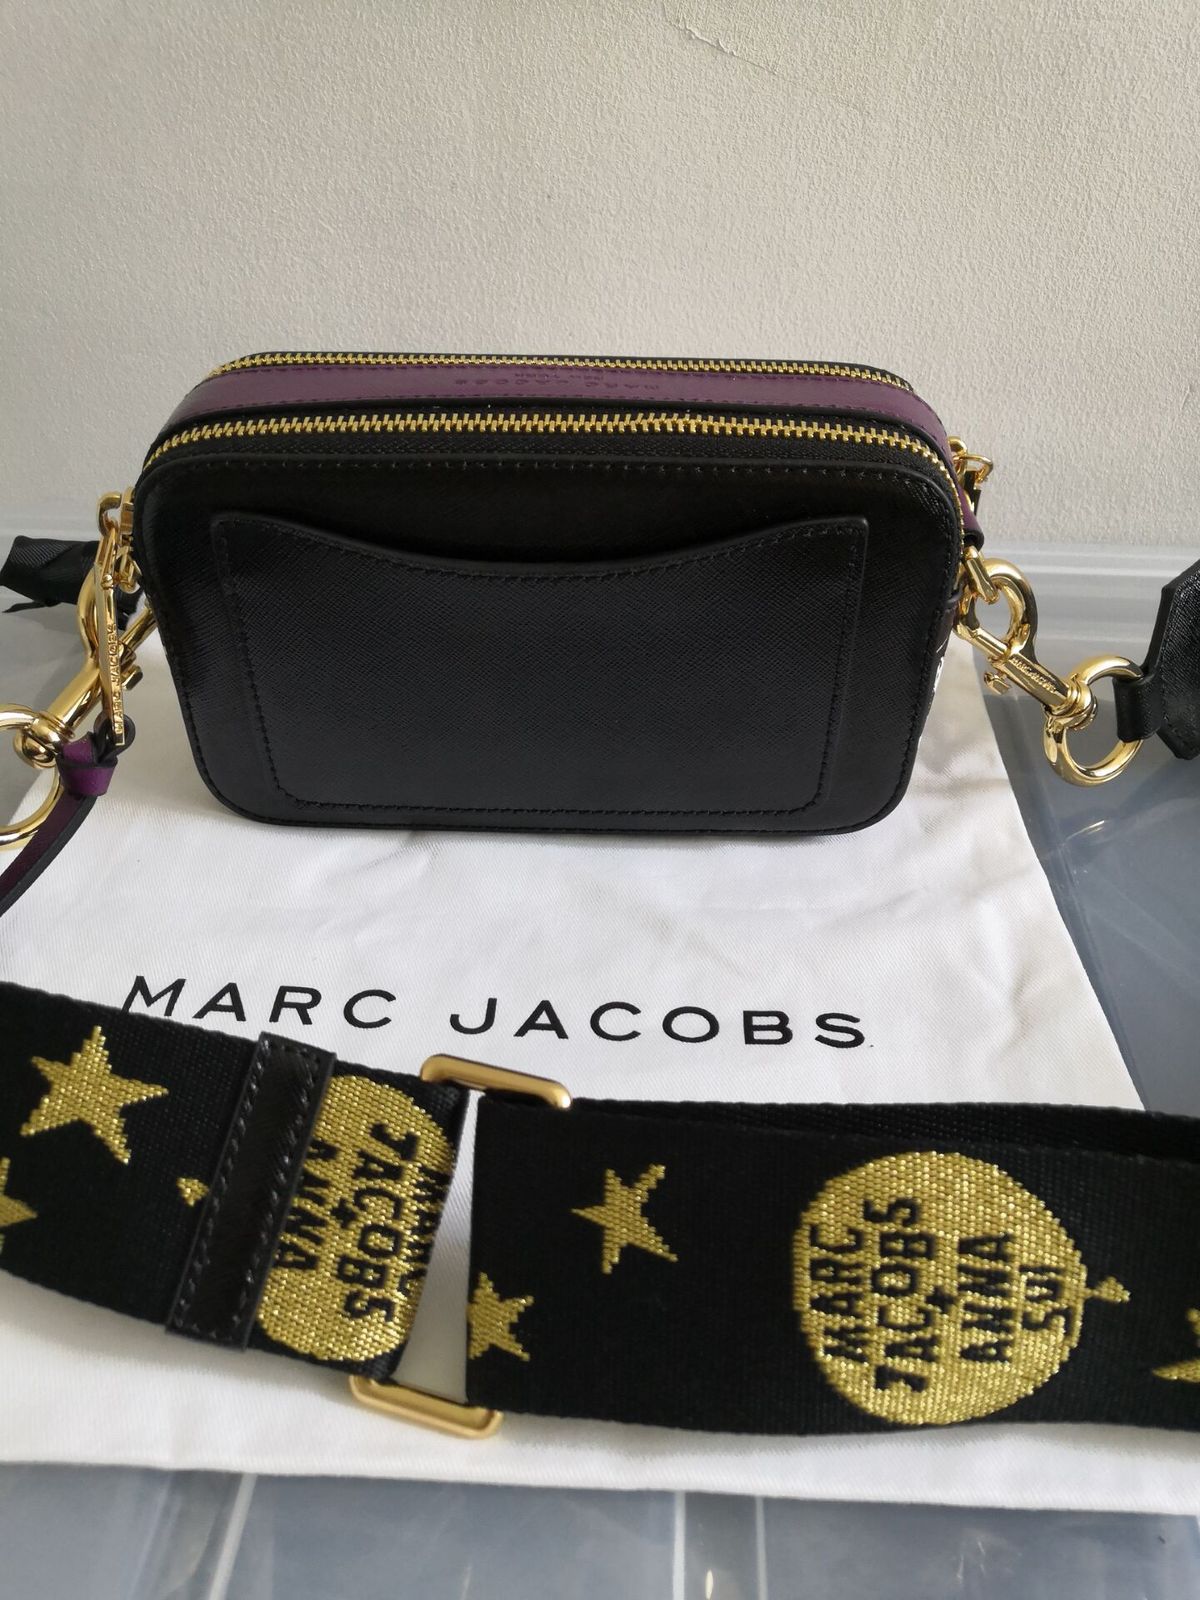 Marc Jacobs Snapshot Small Camera Bag and 18 similar items